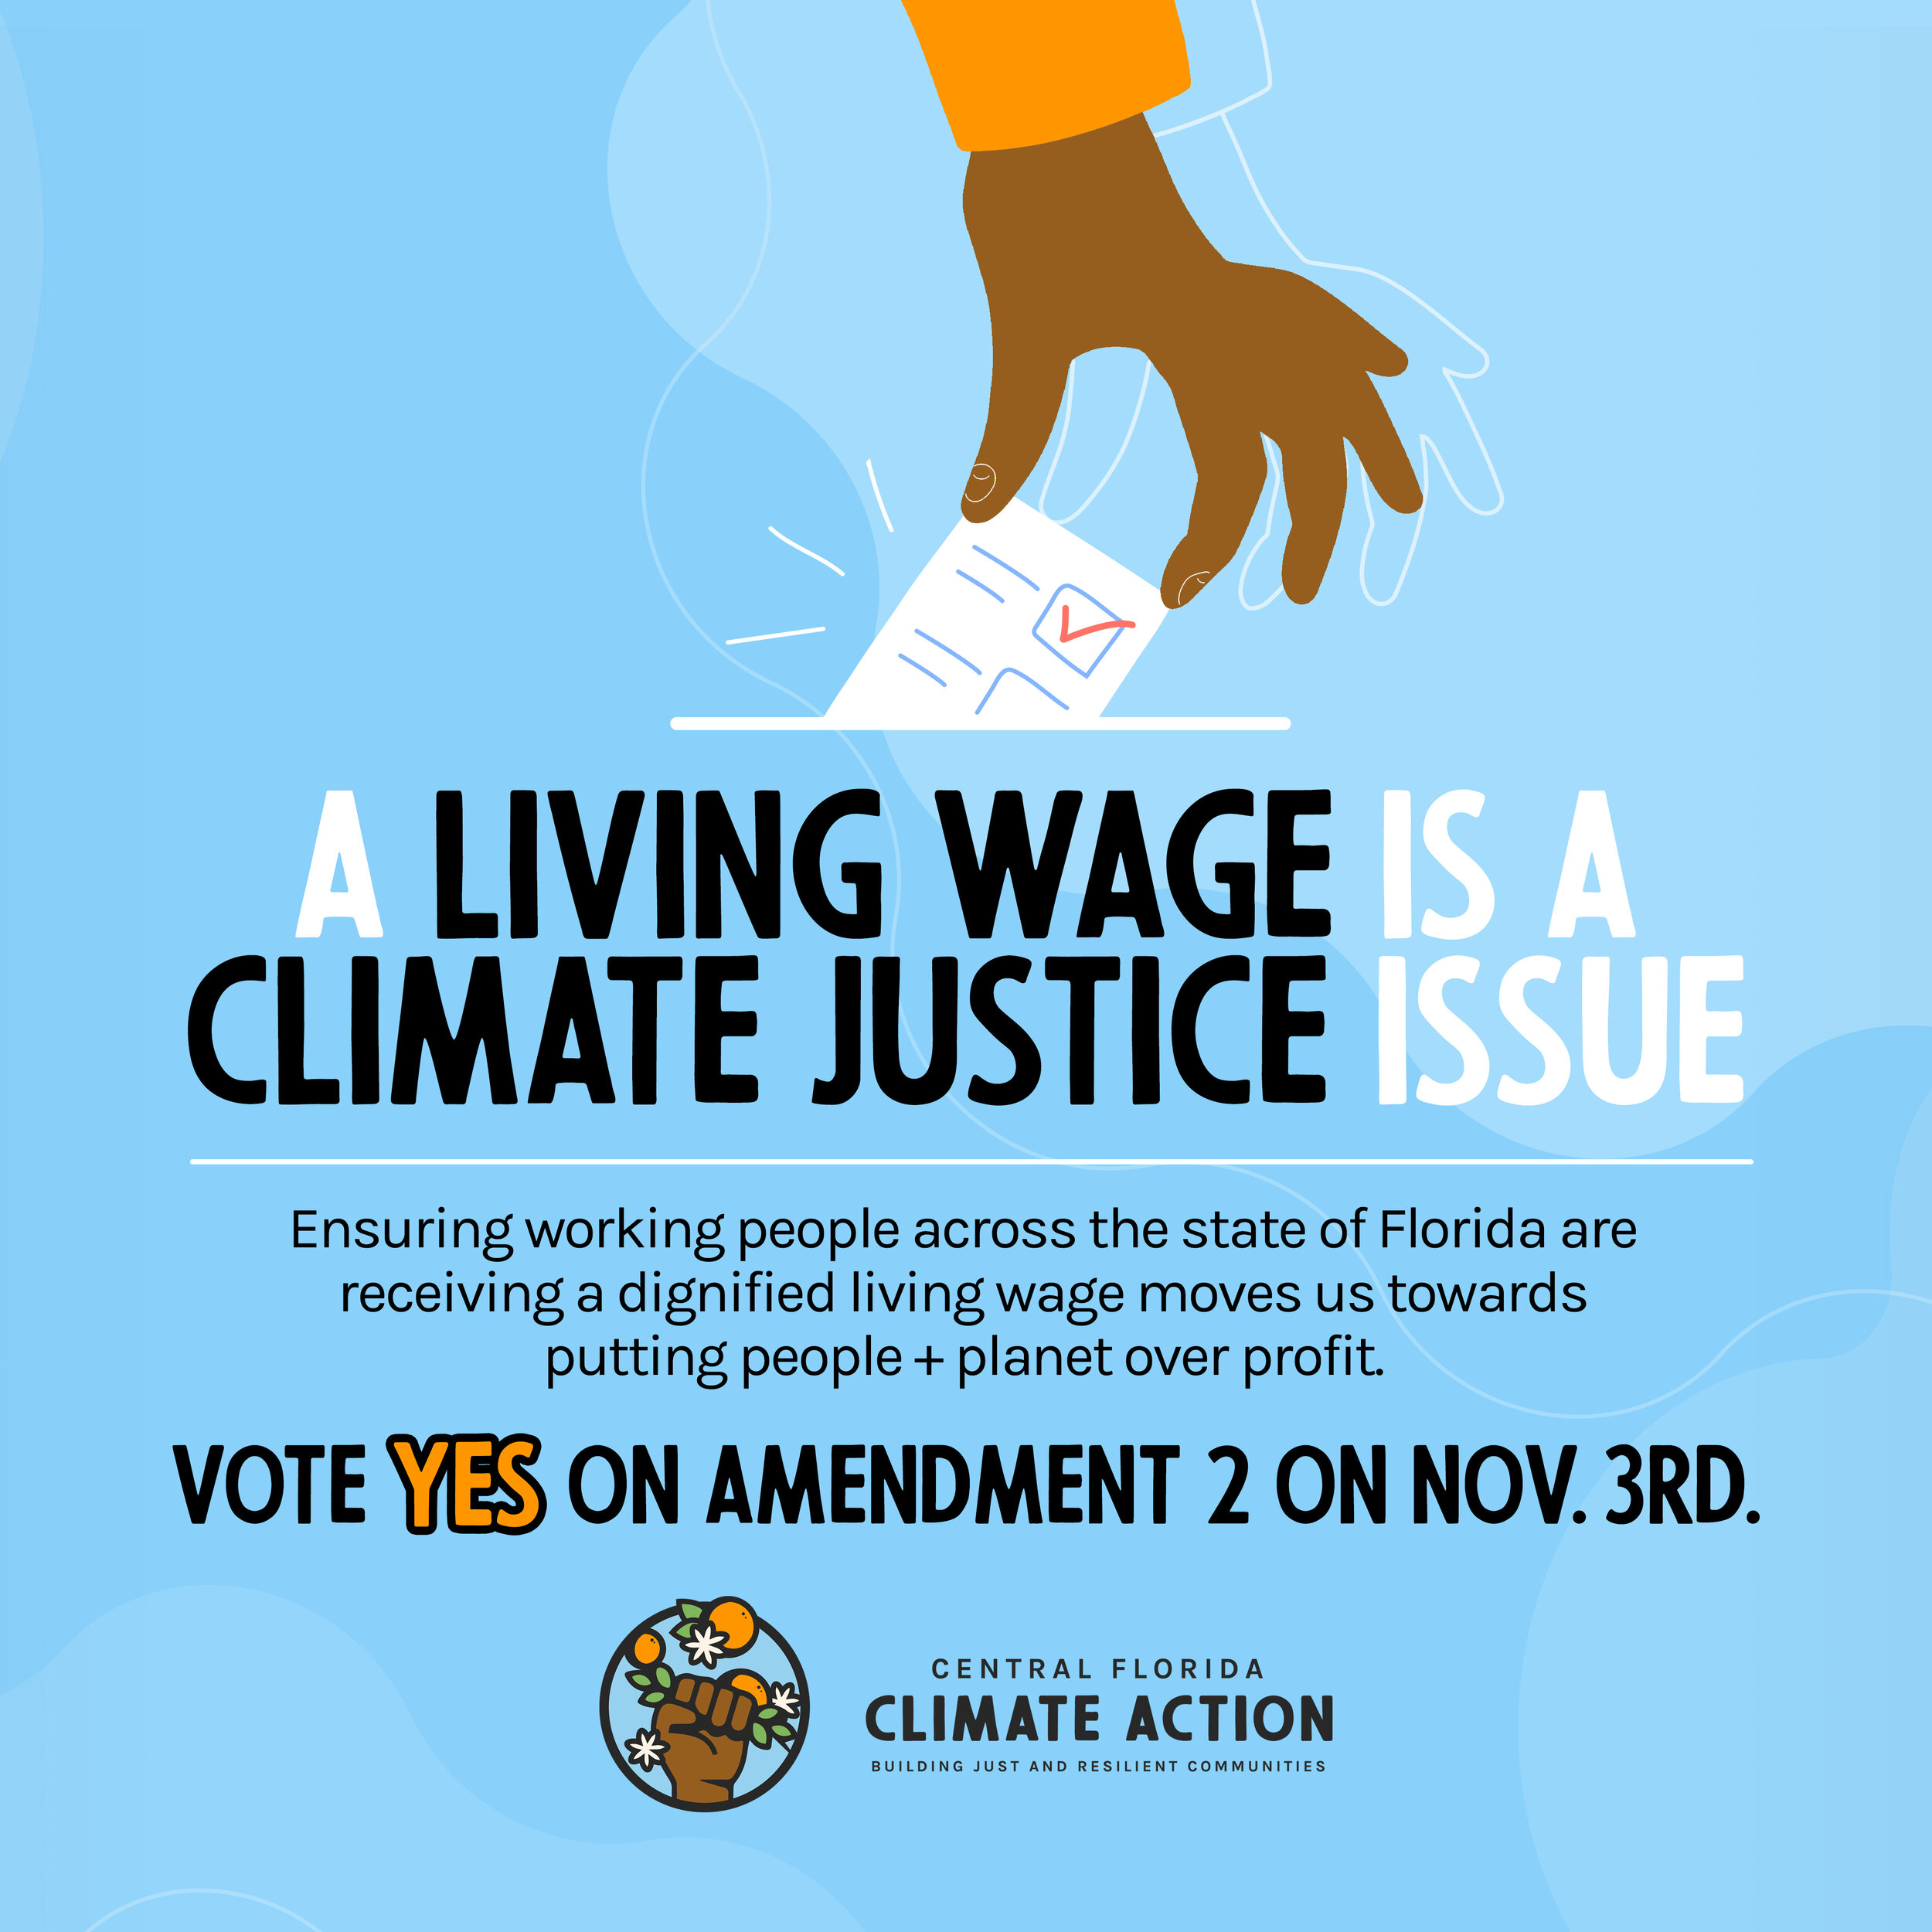 Central Florida Climate Action